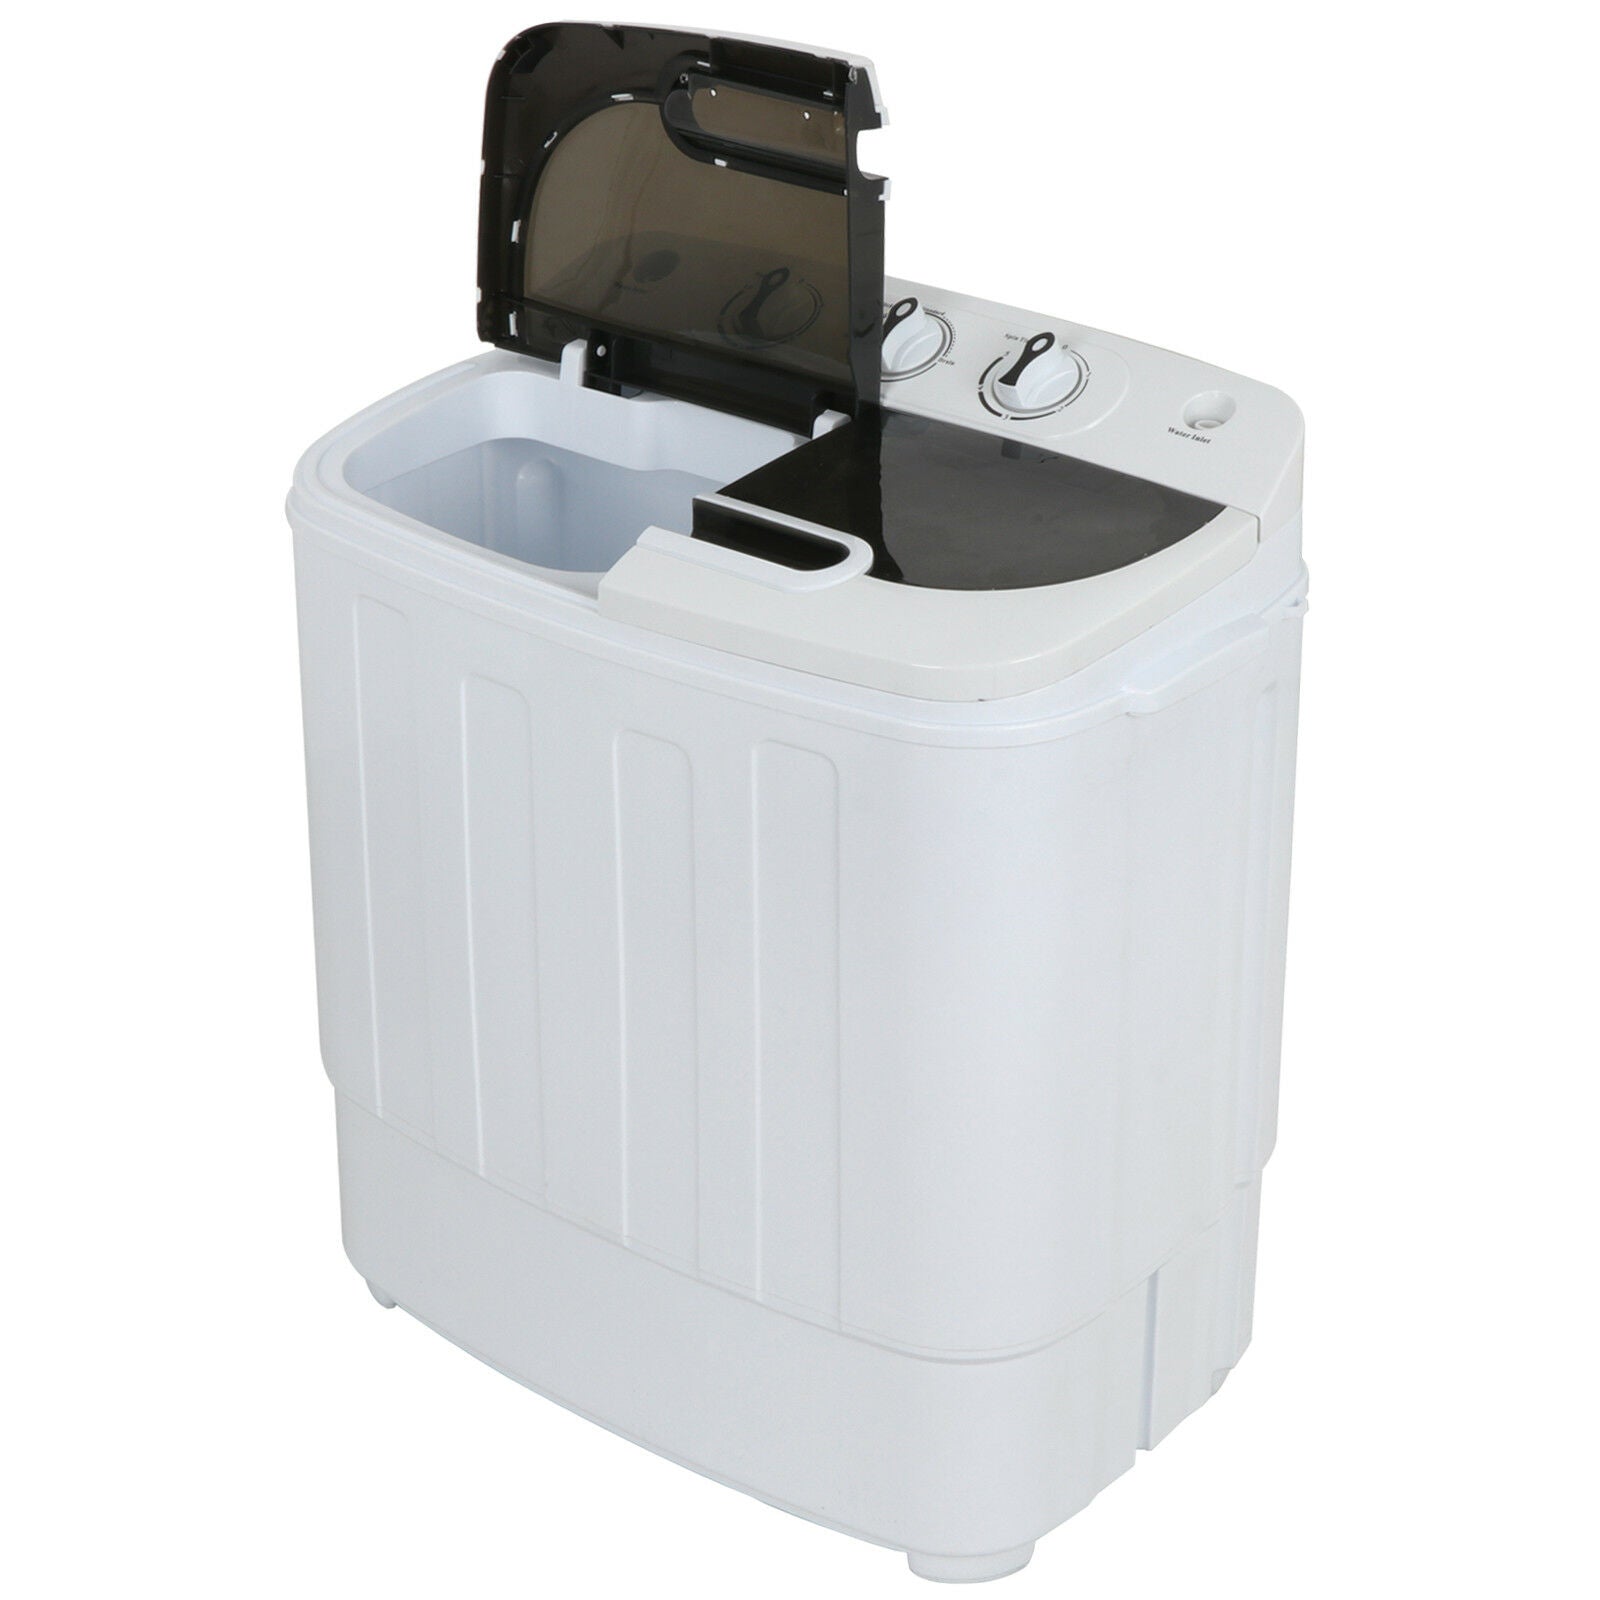 ZENY Portable Washing Machine User Manual